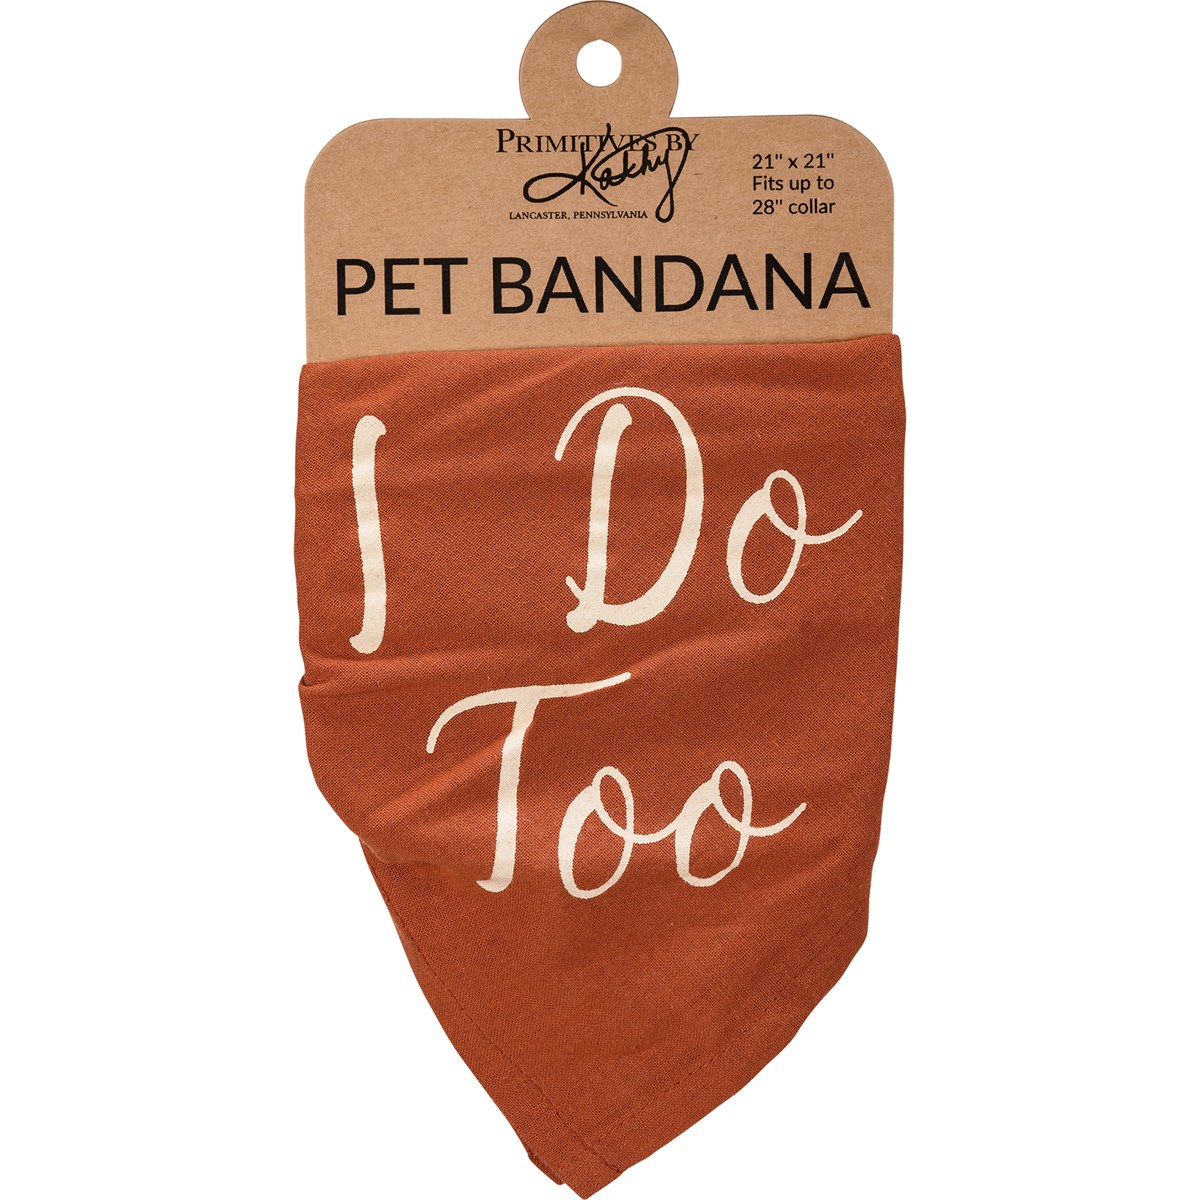 Pet Bandana Lg - I Do Too - 21" x 21" - Cotton